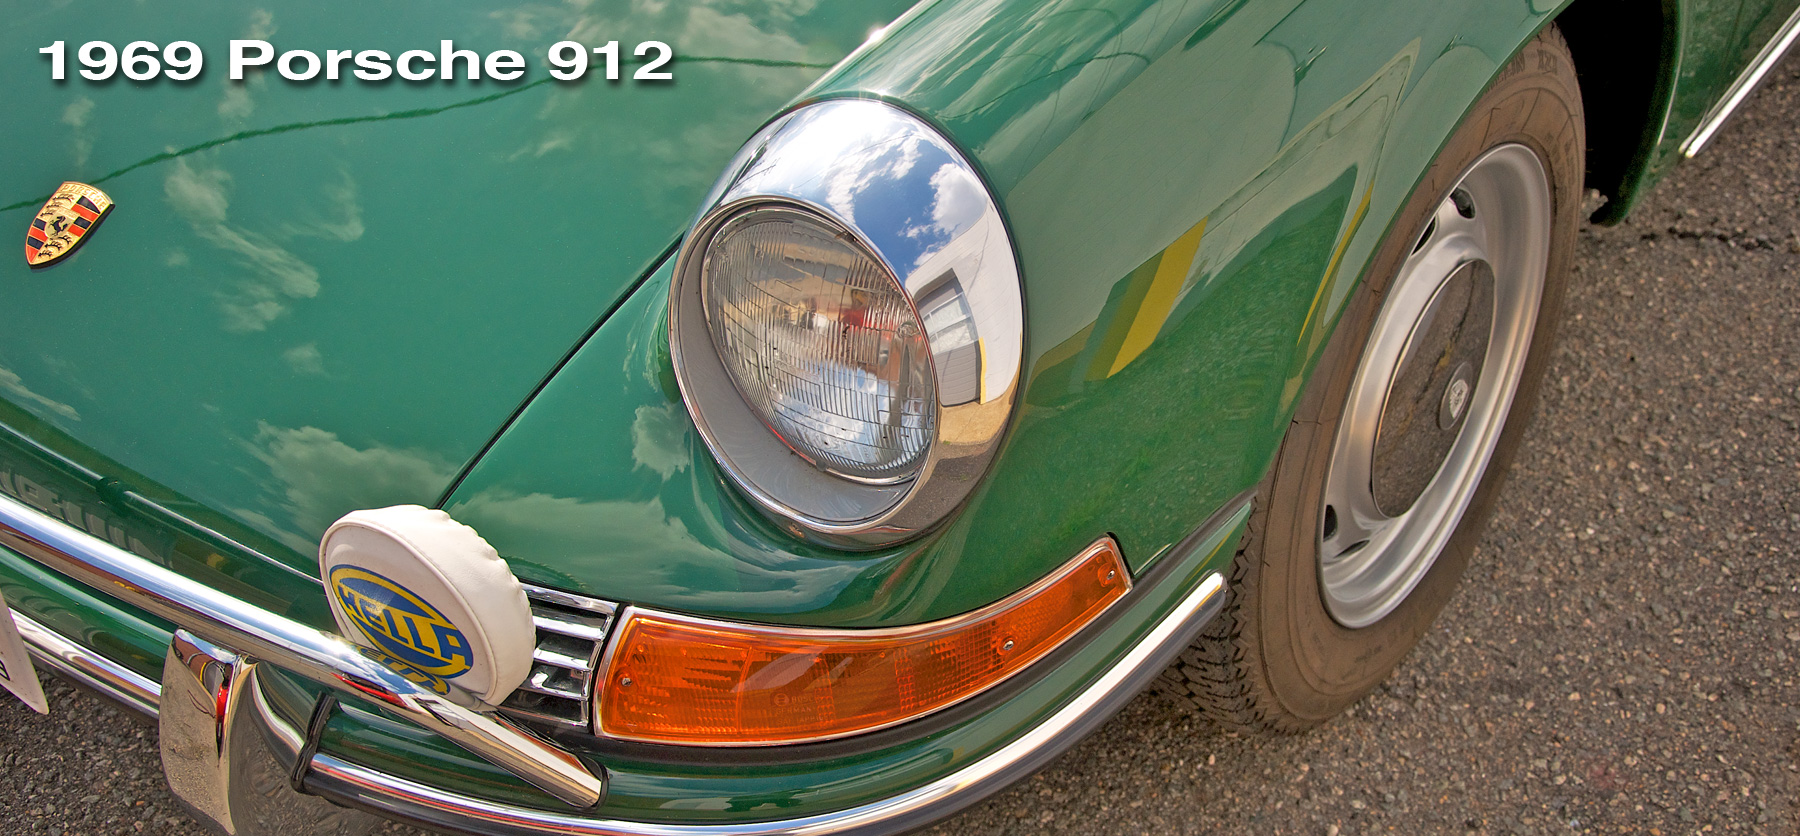 Irish Green Porsche 912 header image for Lufteknic project car page.